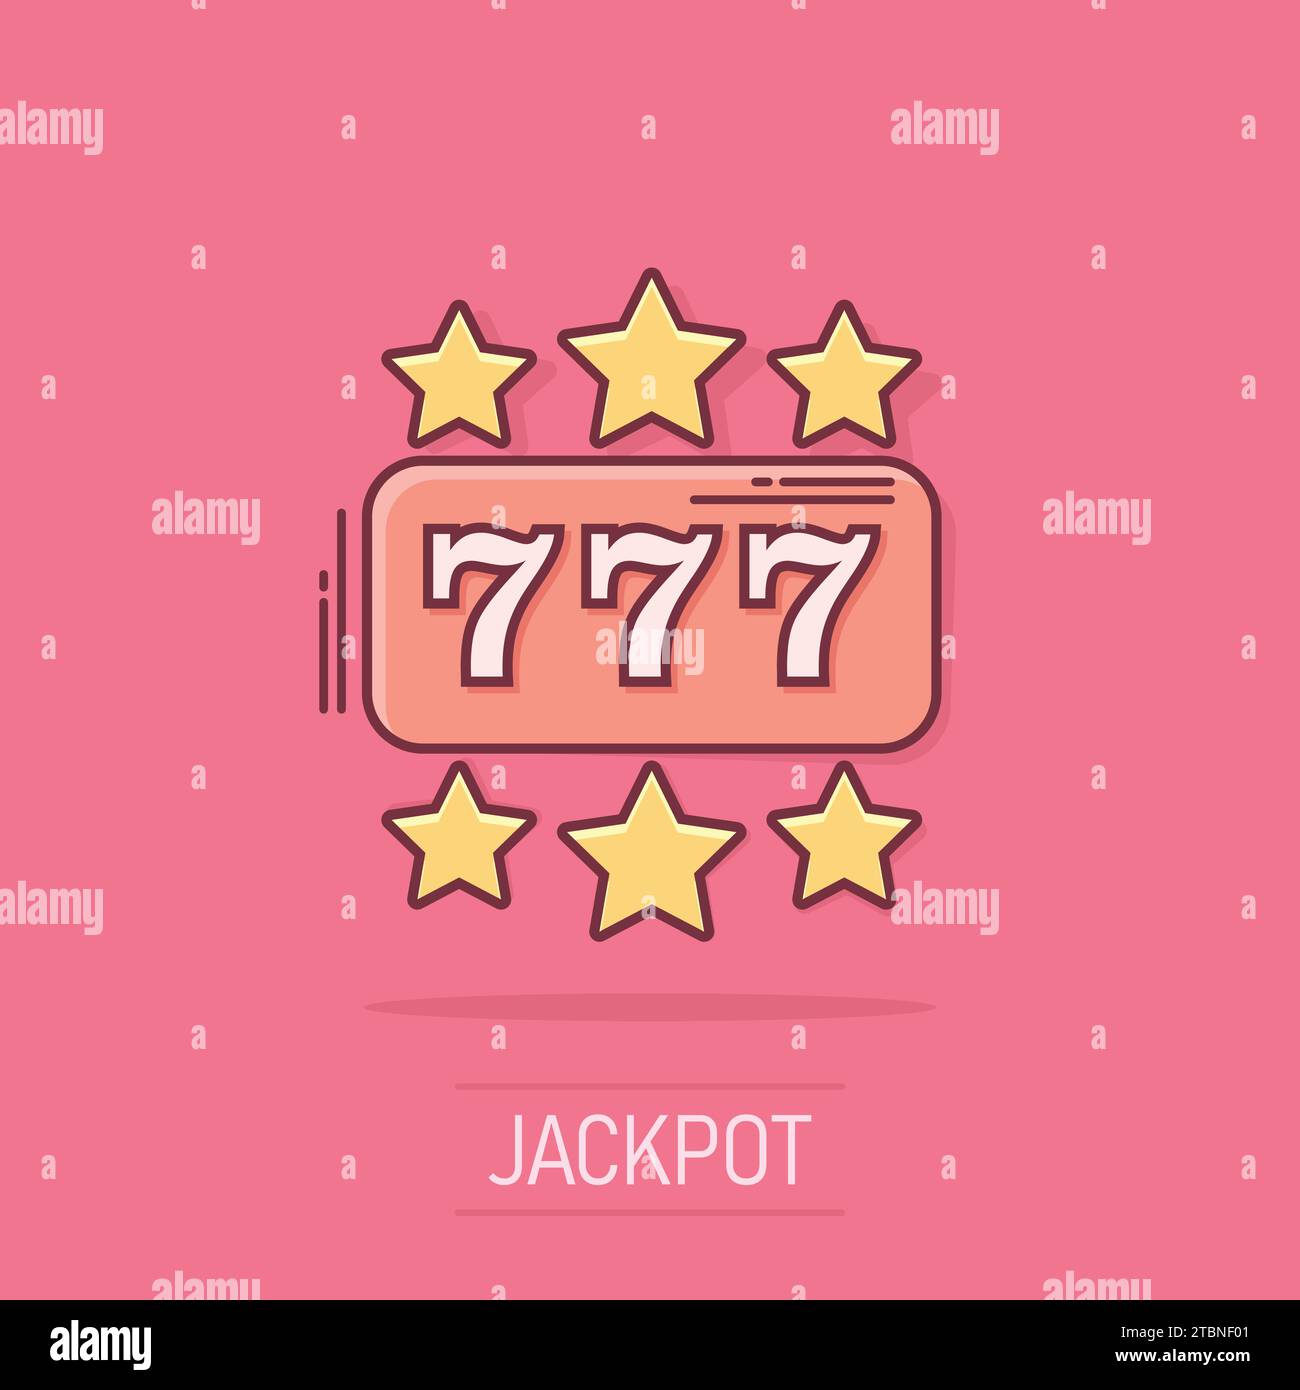 Vector cartoon casino slot machine icon in comic style. 777 jackpot sign illustration pictogram. Casino winner business splash effect concept. Stock Vector